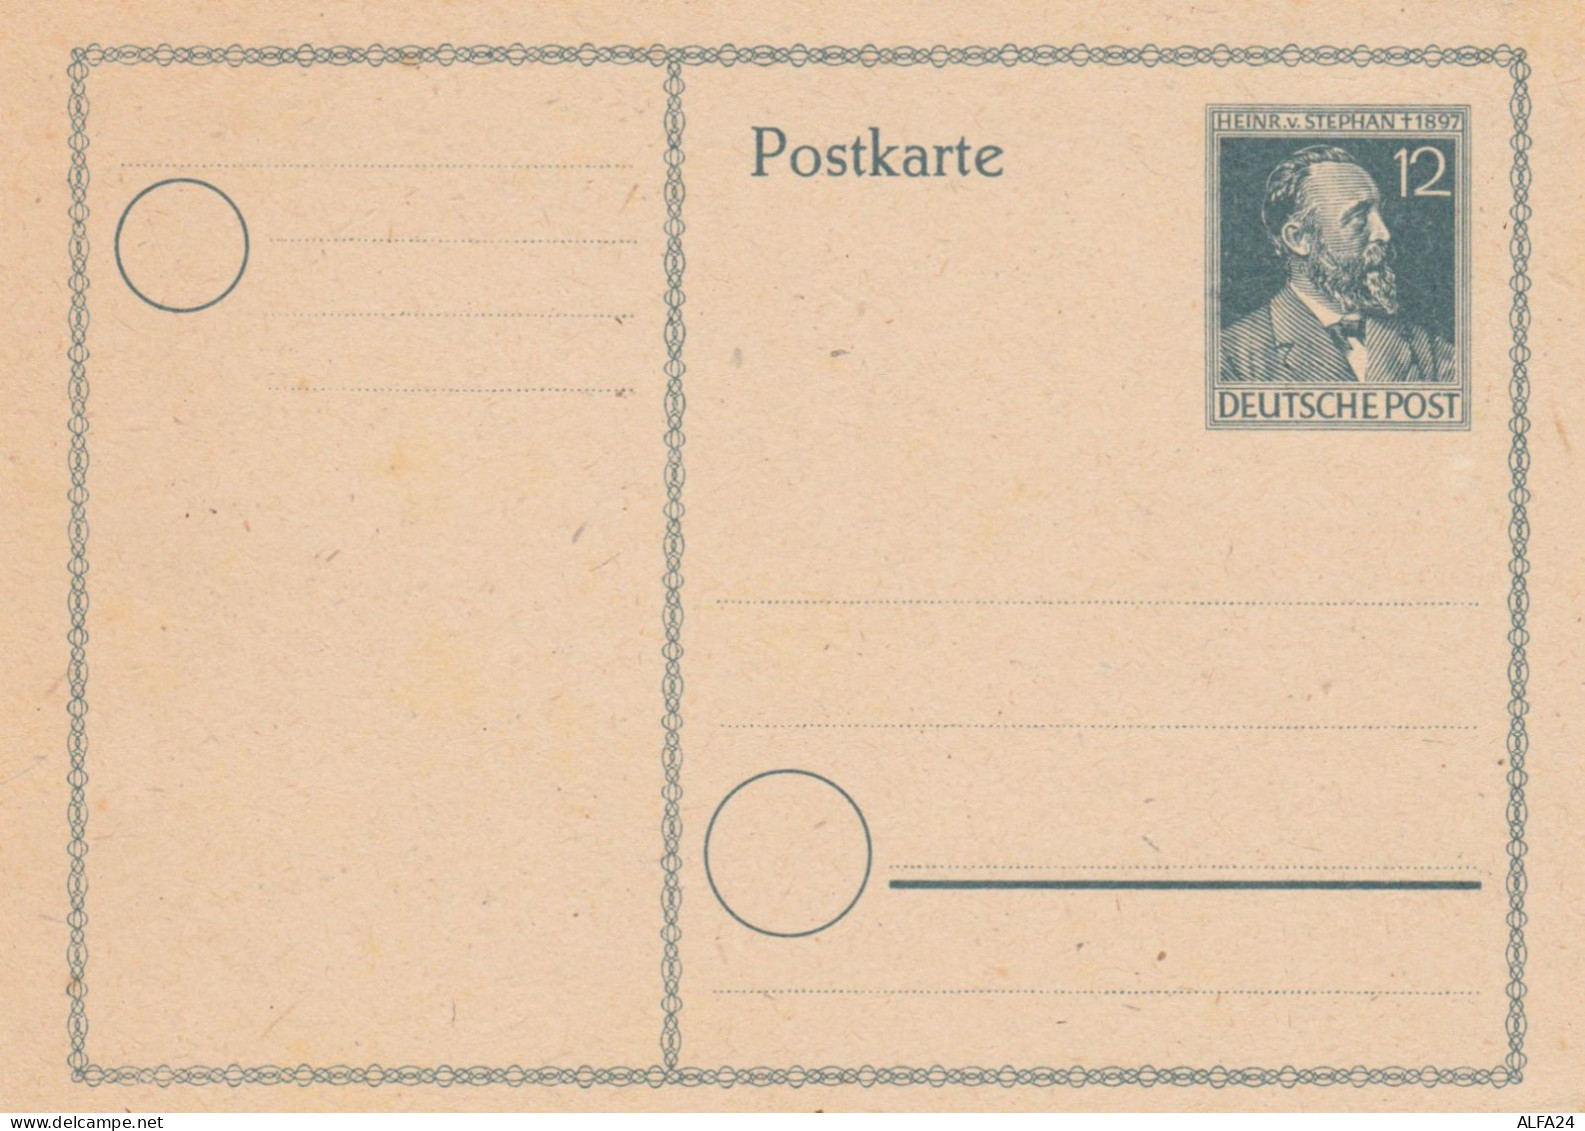 INTERO POSTALE 1948 HEINR STEPHAN NUOVO 12 PF GERMANIA (KP588 - Postcards - Mint